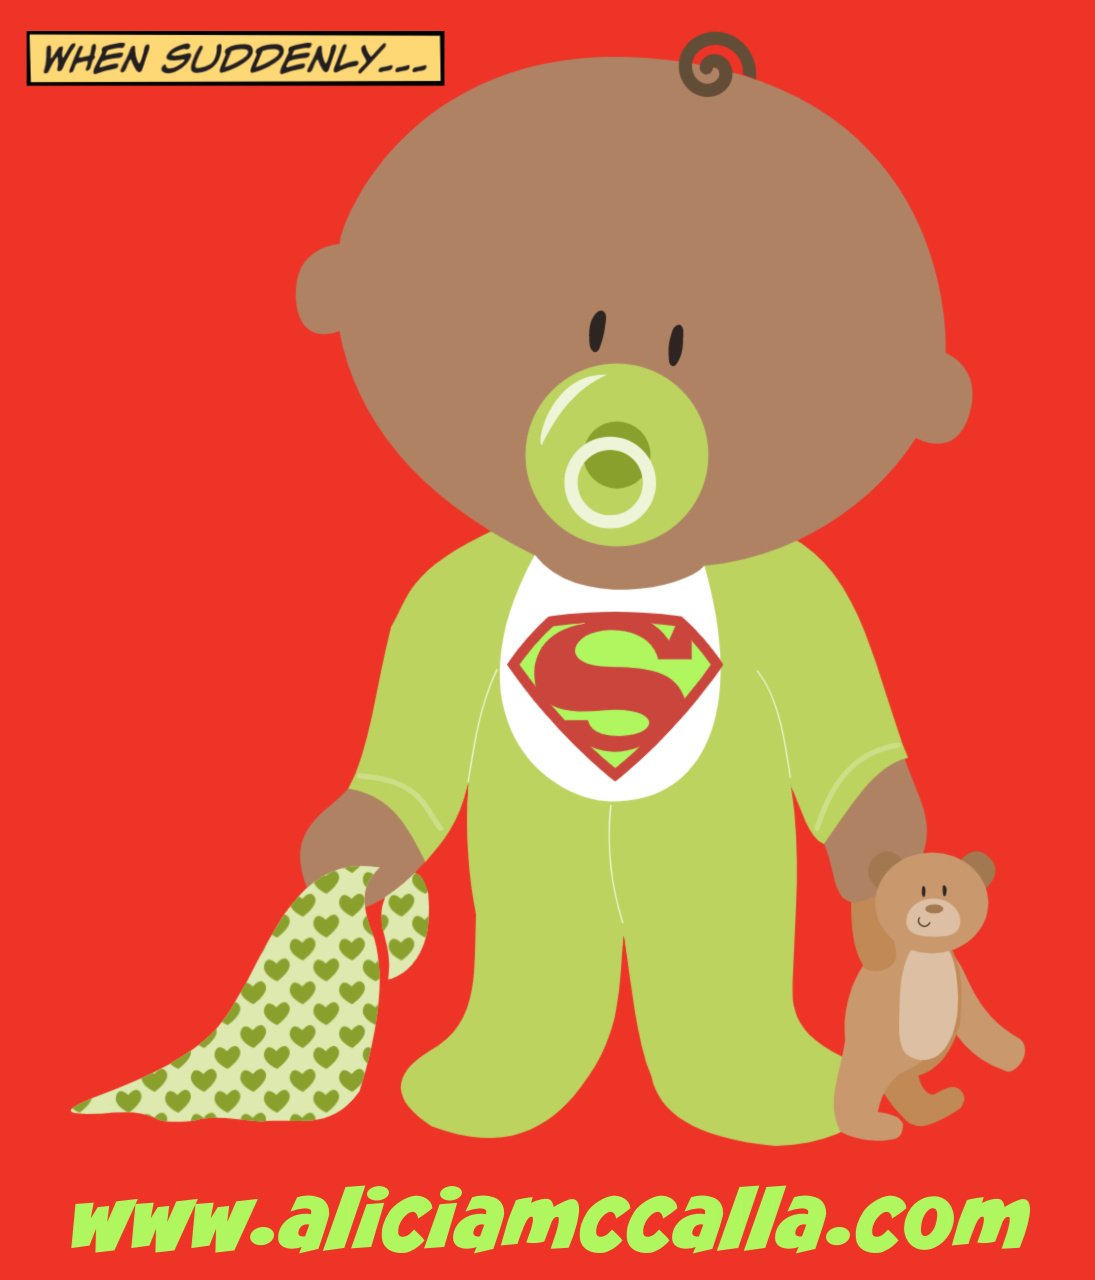 Post Apocalyptic Flash Fiction: "The Superhero Baby Boy"